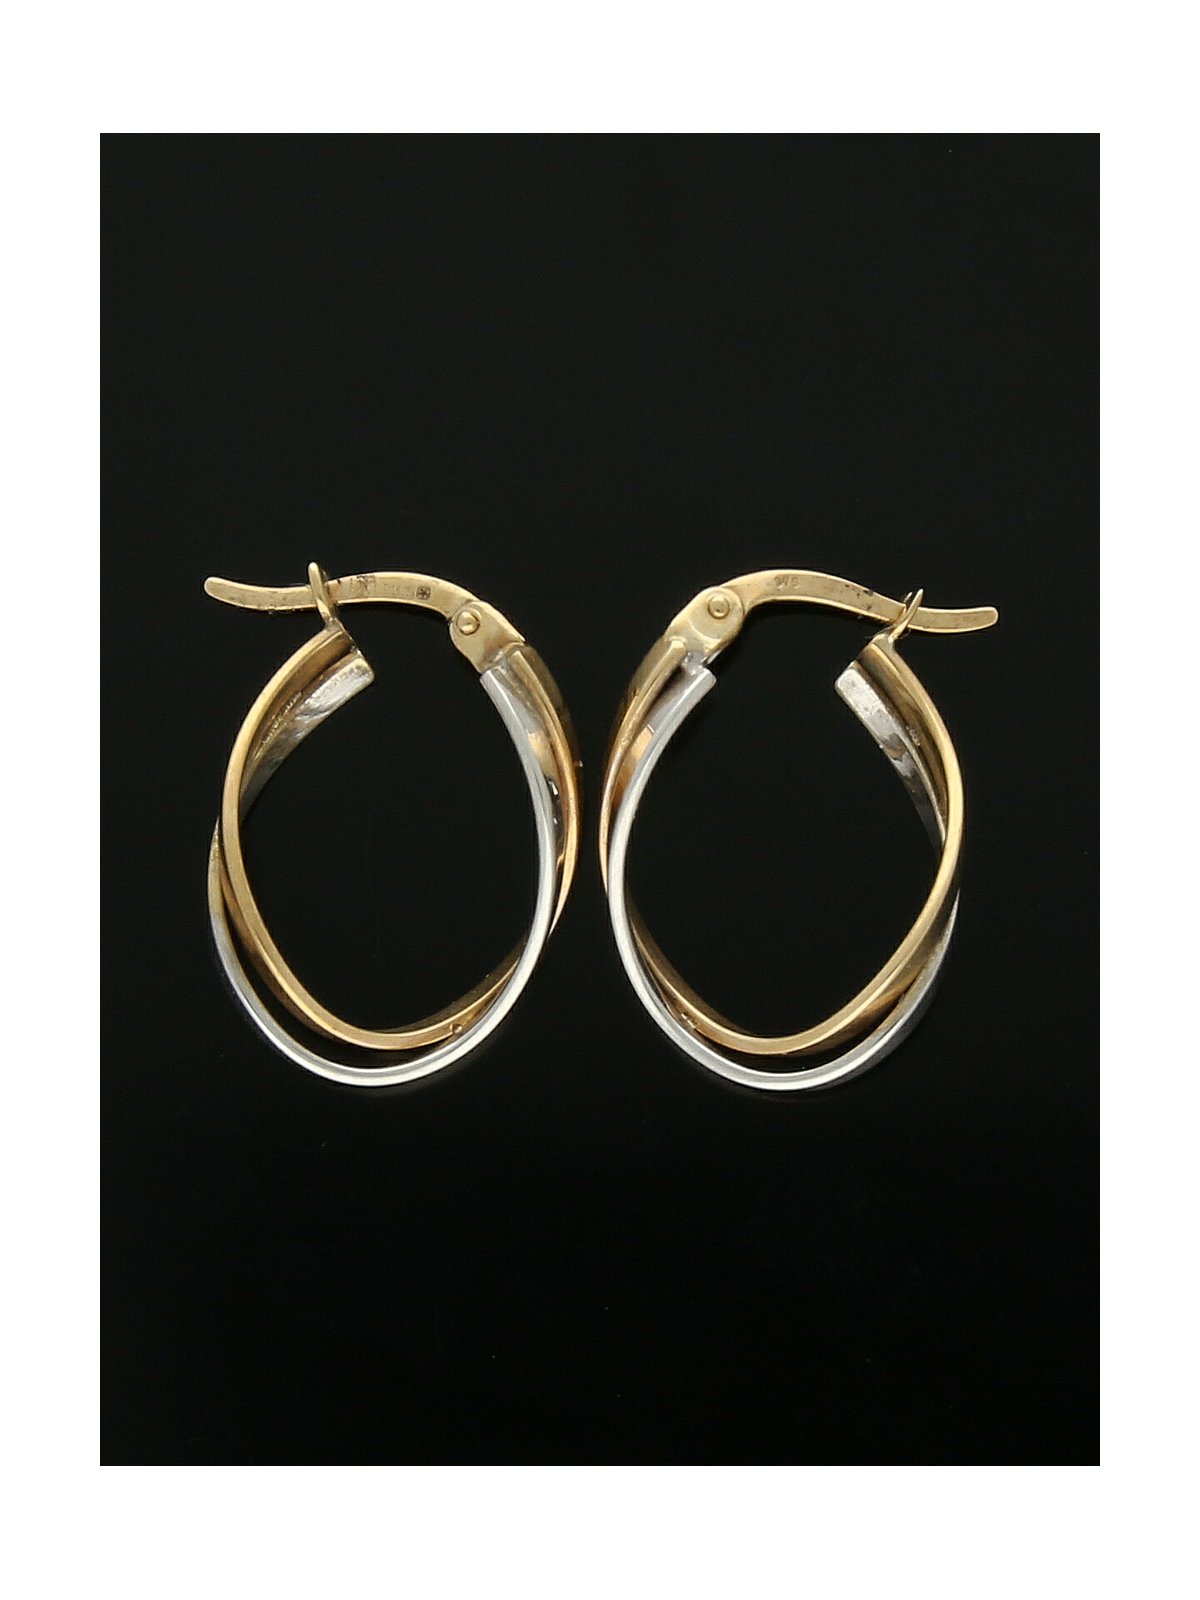 Elongated Wavy Hoop Earrings 14mm in 9ct Yellow & White Gold